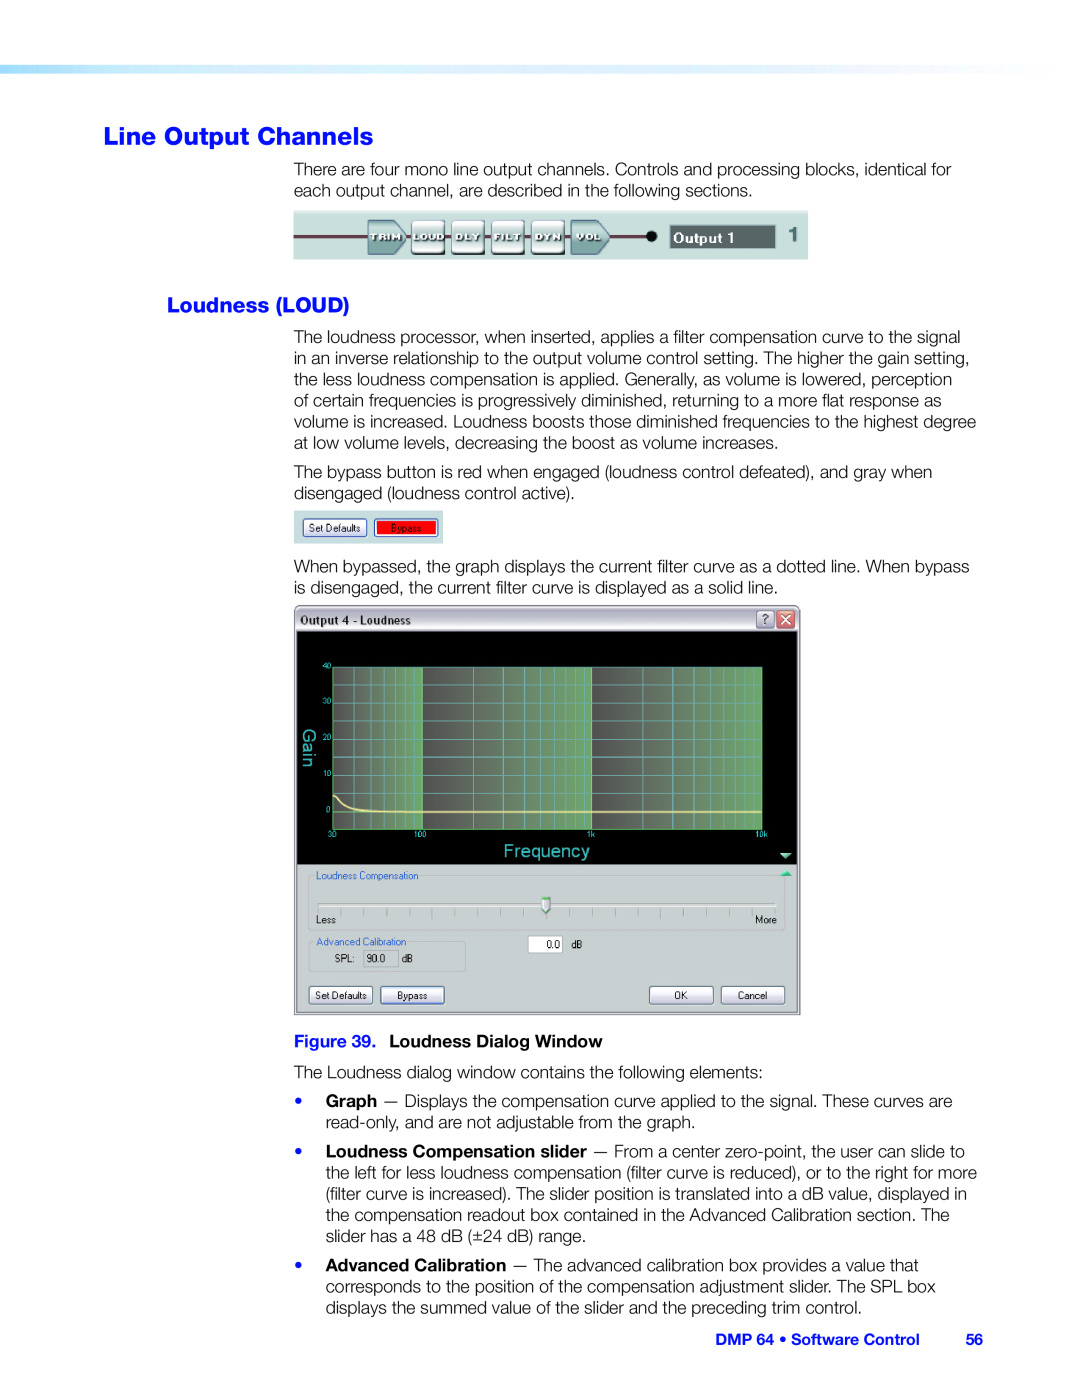 Extron electronic DMP 64 manual Line Output Channels, Loudness LOUD, Loudness Dialog Window 